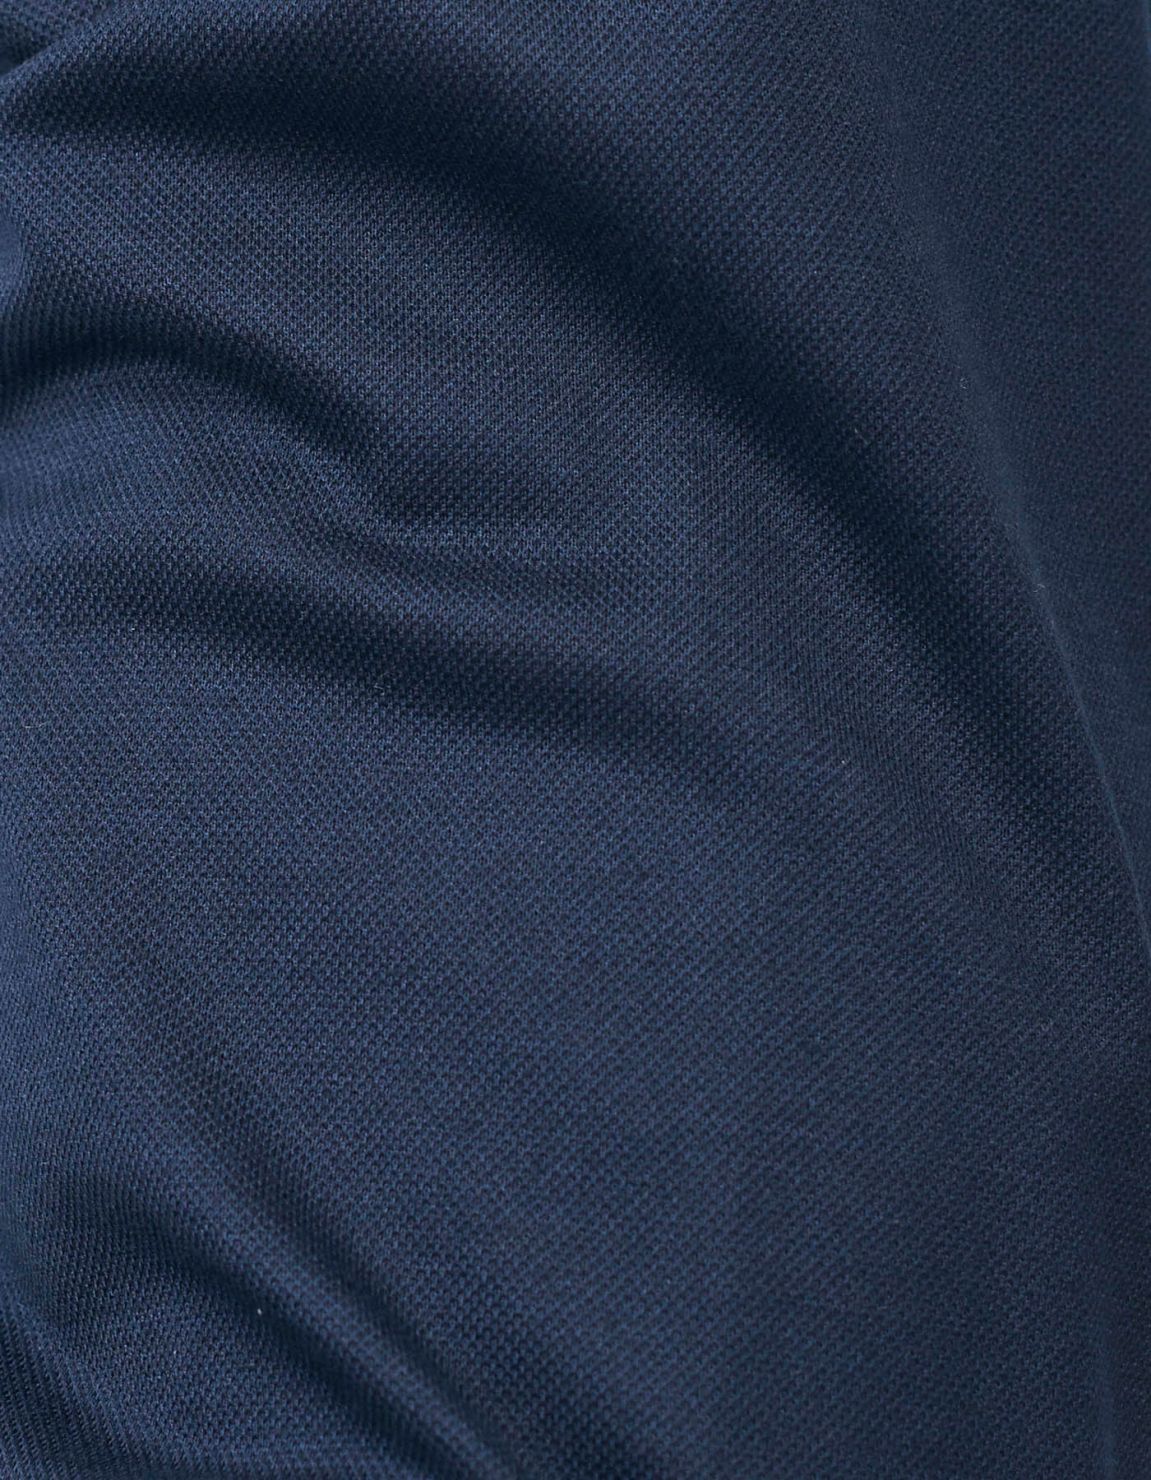 Camisa Cuello francés Liso Piqué Azul marino Tailor Custom Fit 2